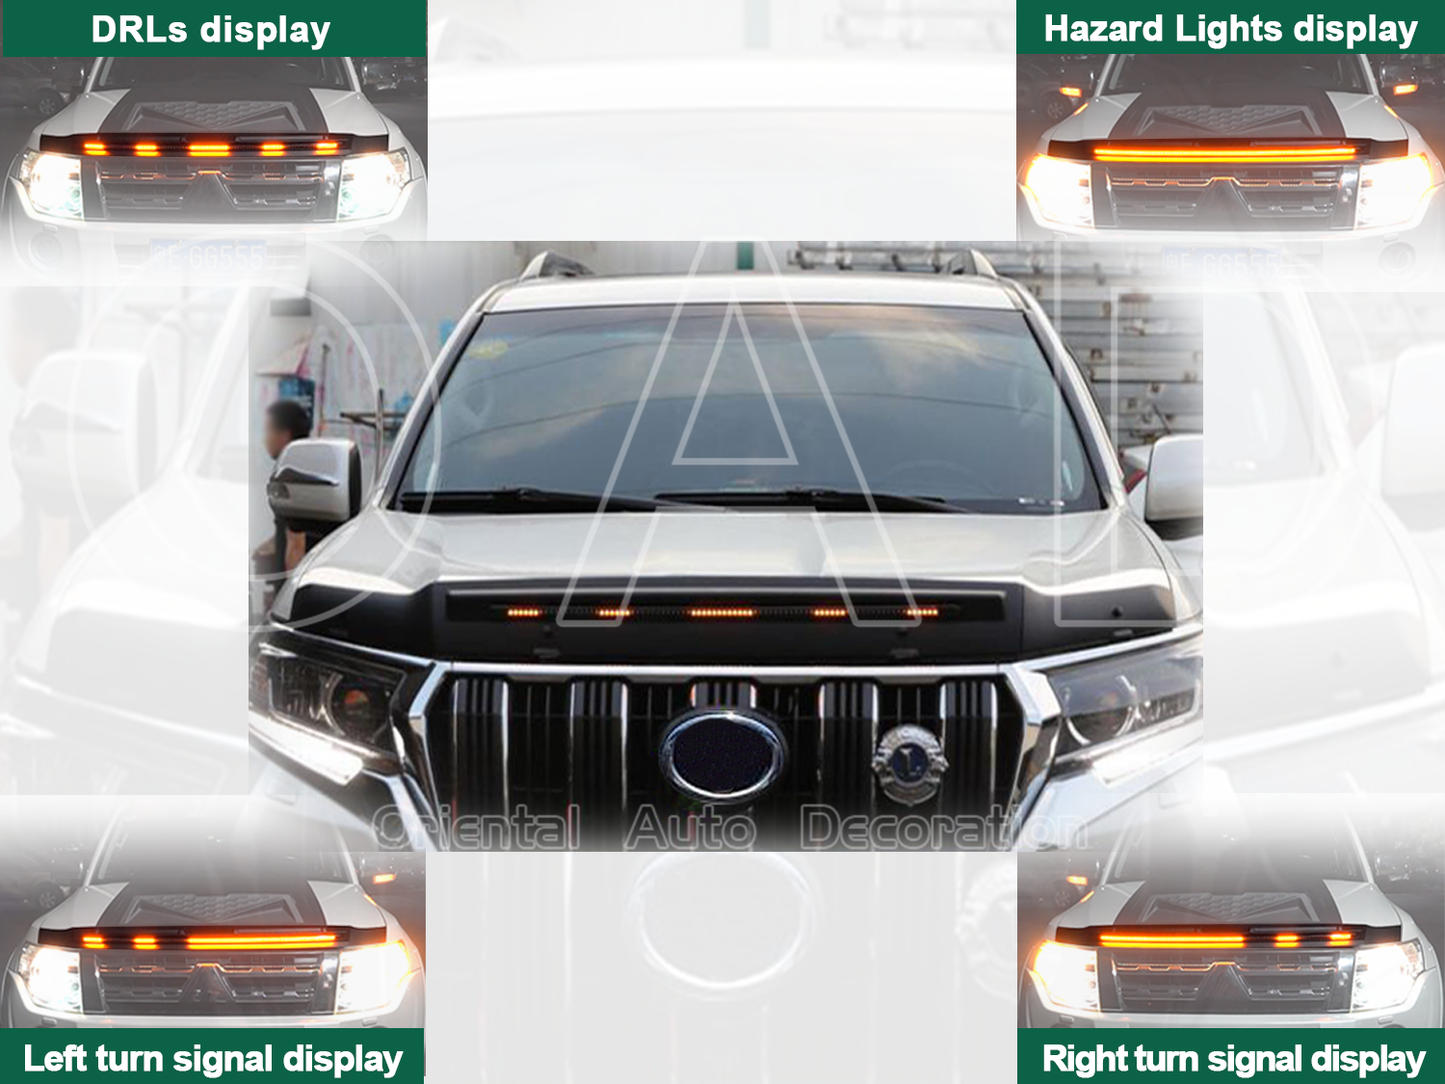 LED Light Bonnet Protector Hood Protector for Toyota Land Cruiser Prado 150 2018+